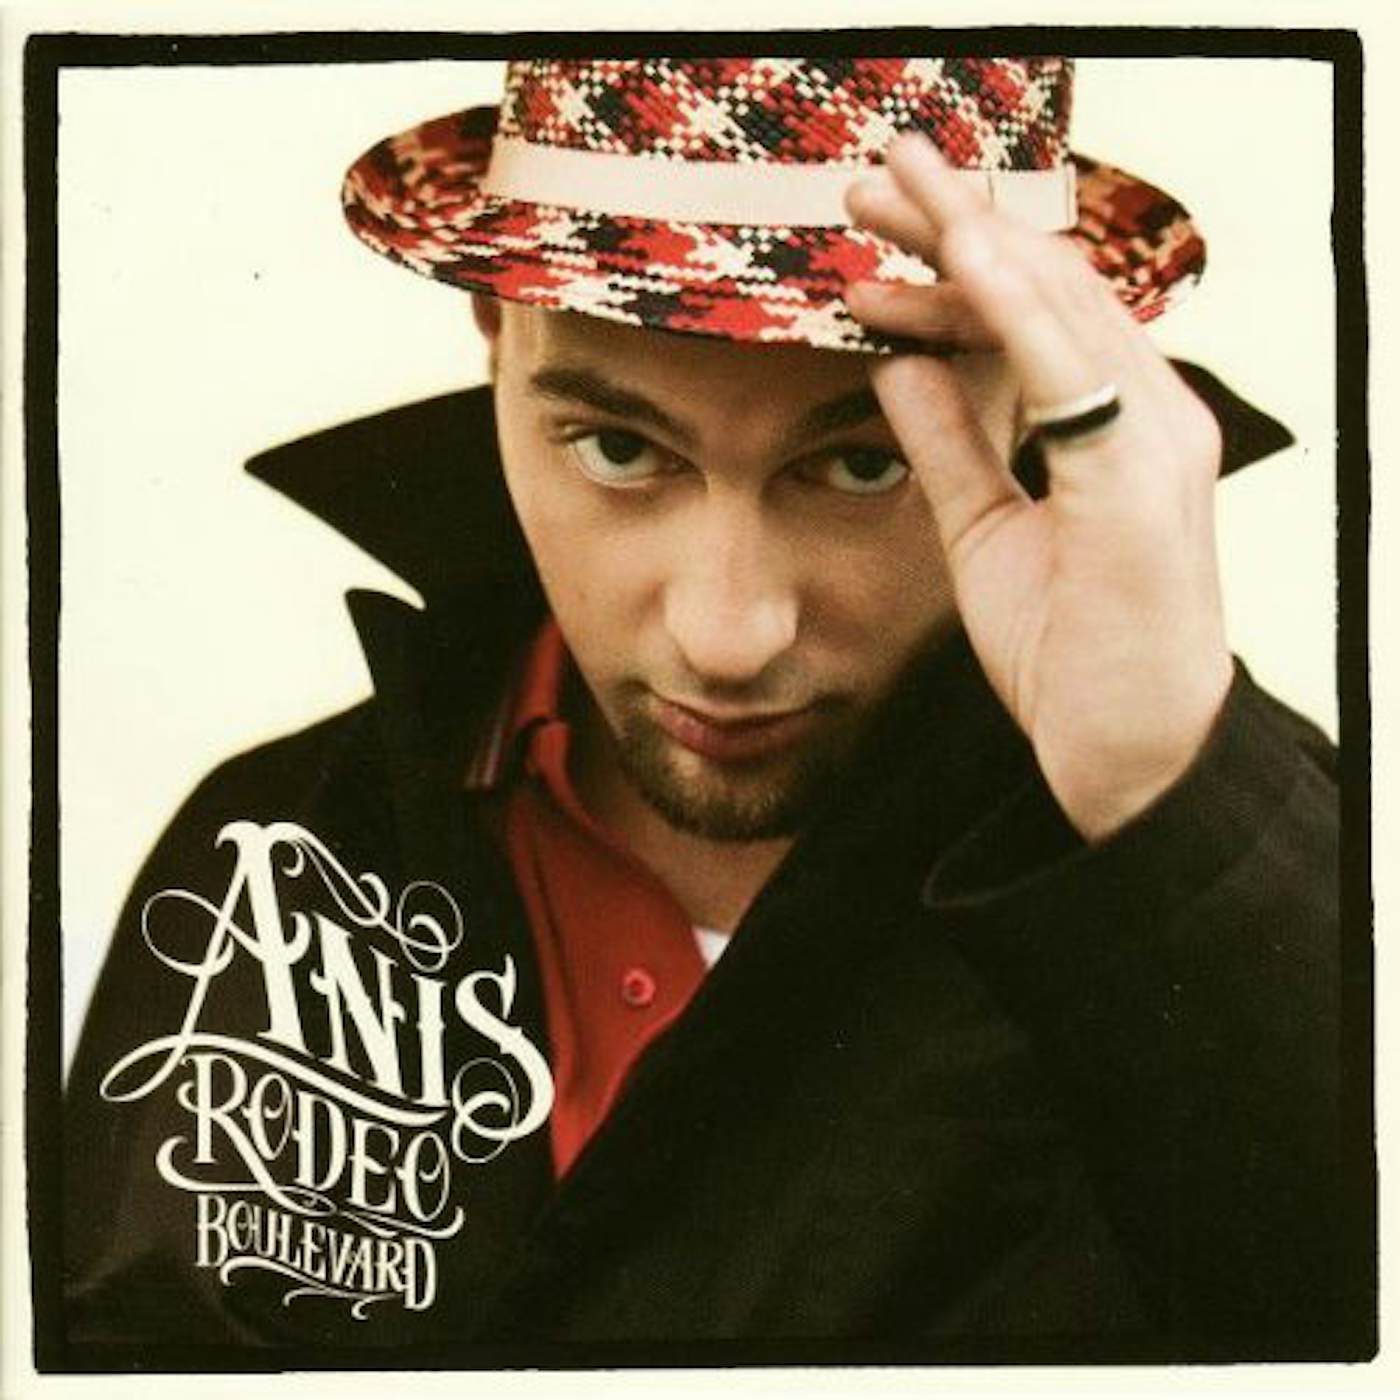 Anis RODEO BOULEVARD CD